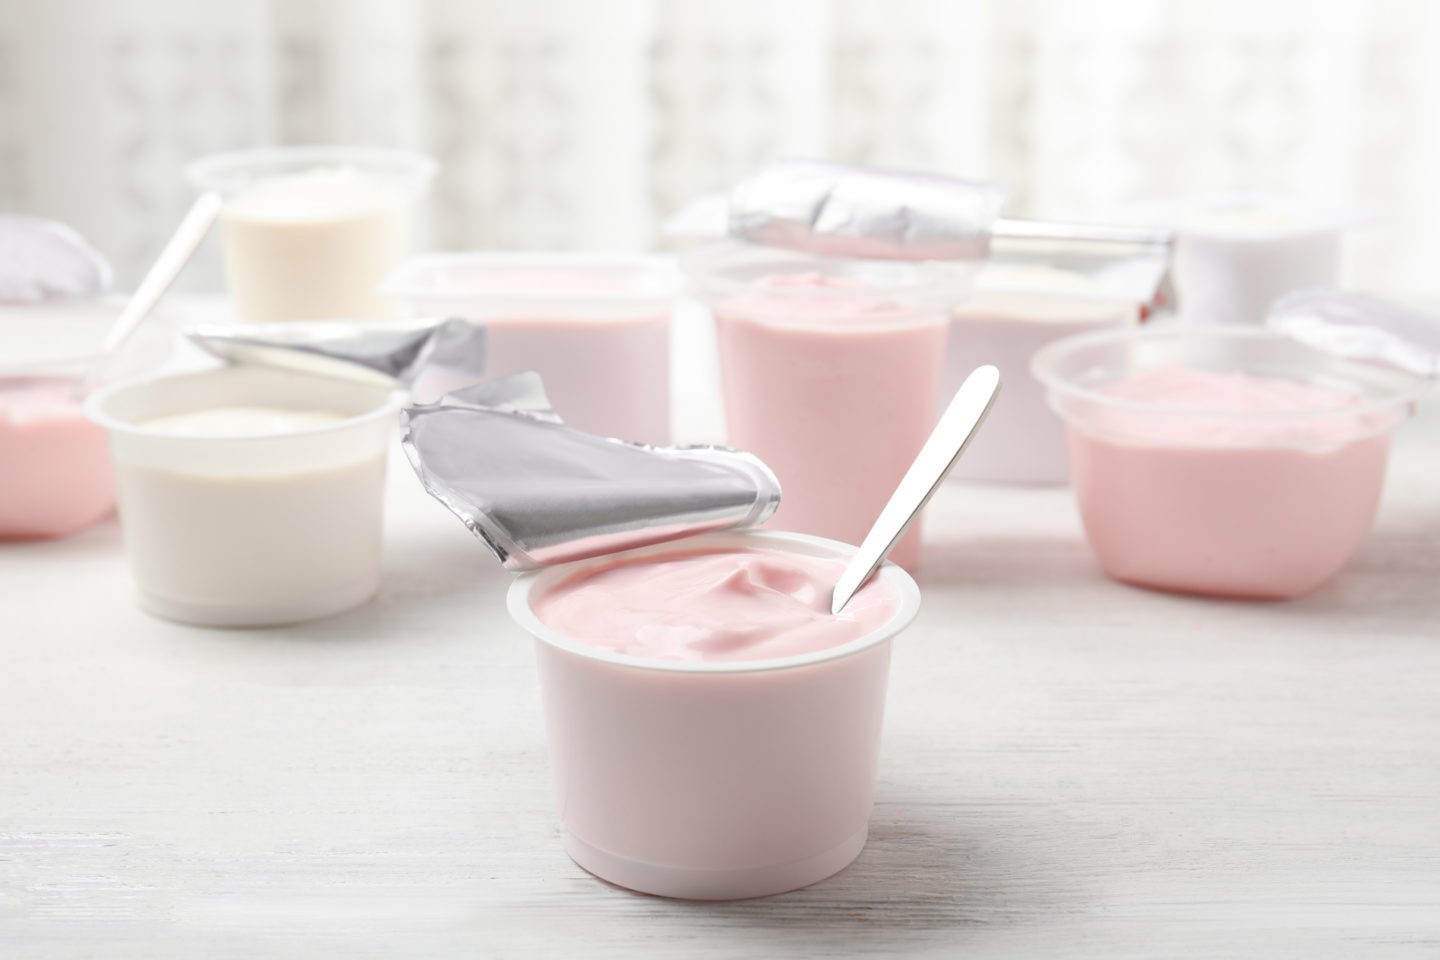 flavored yogurt in cups